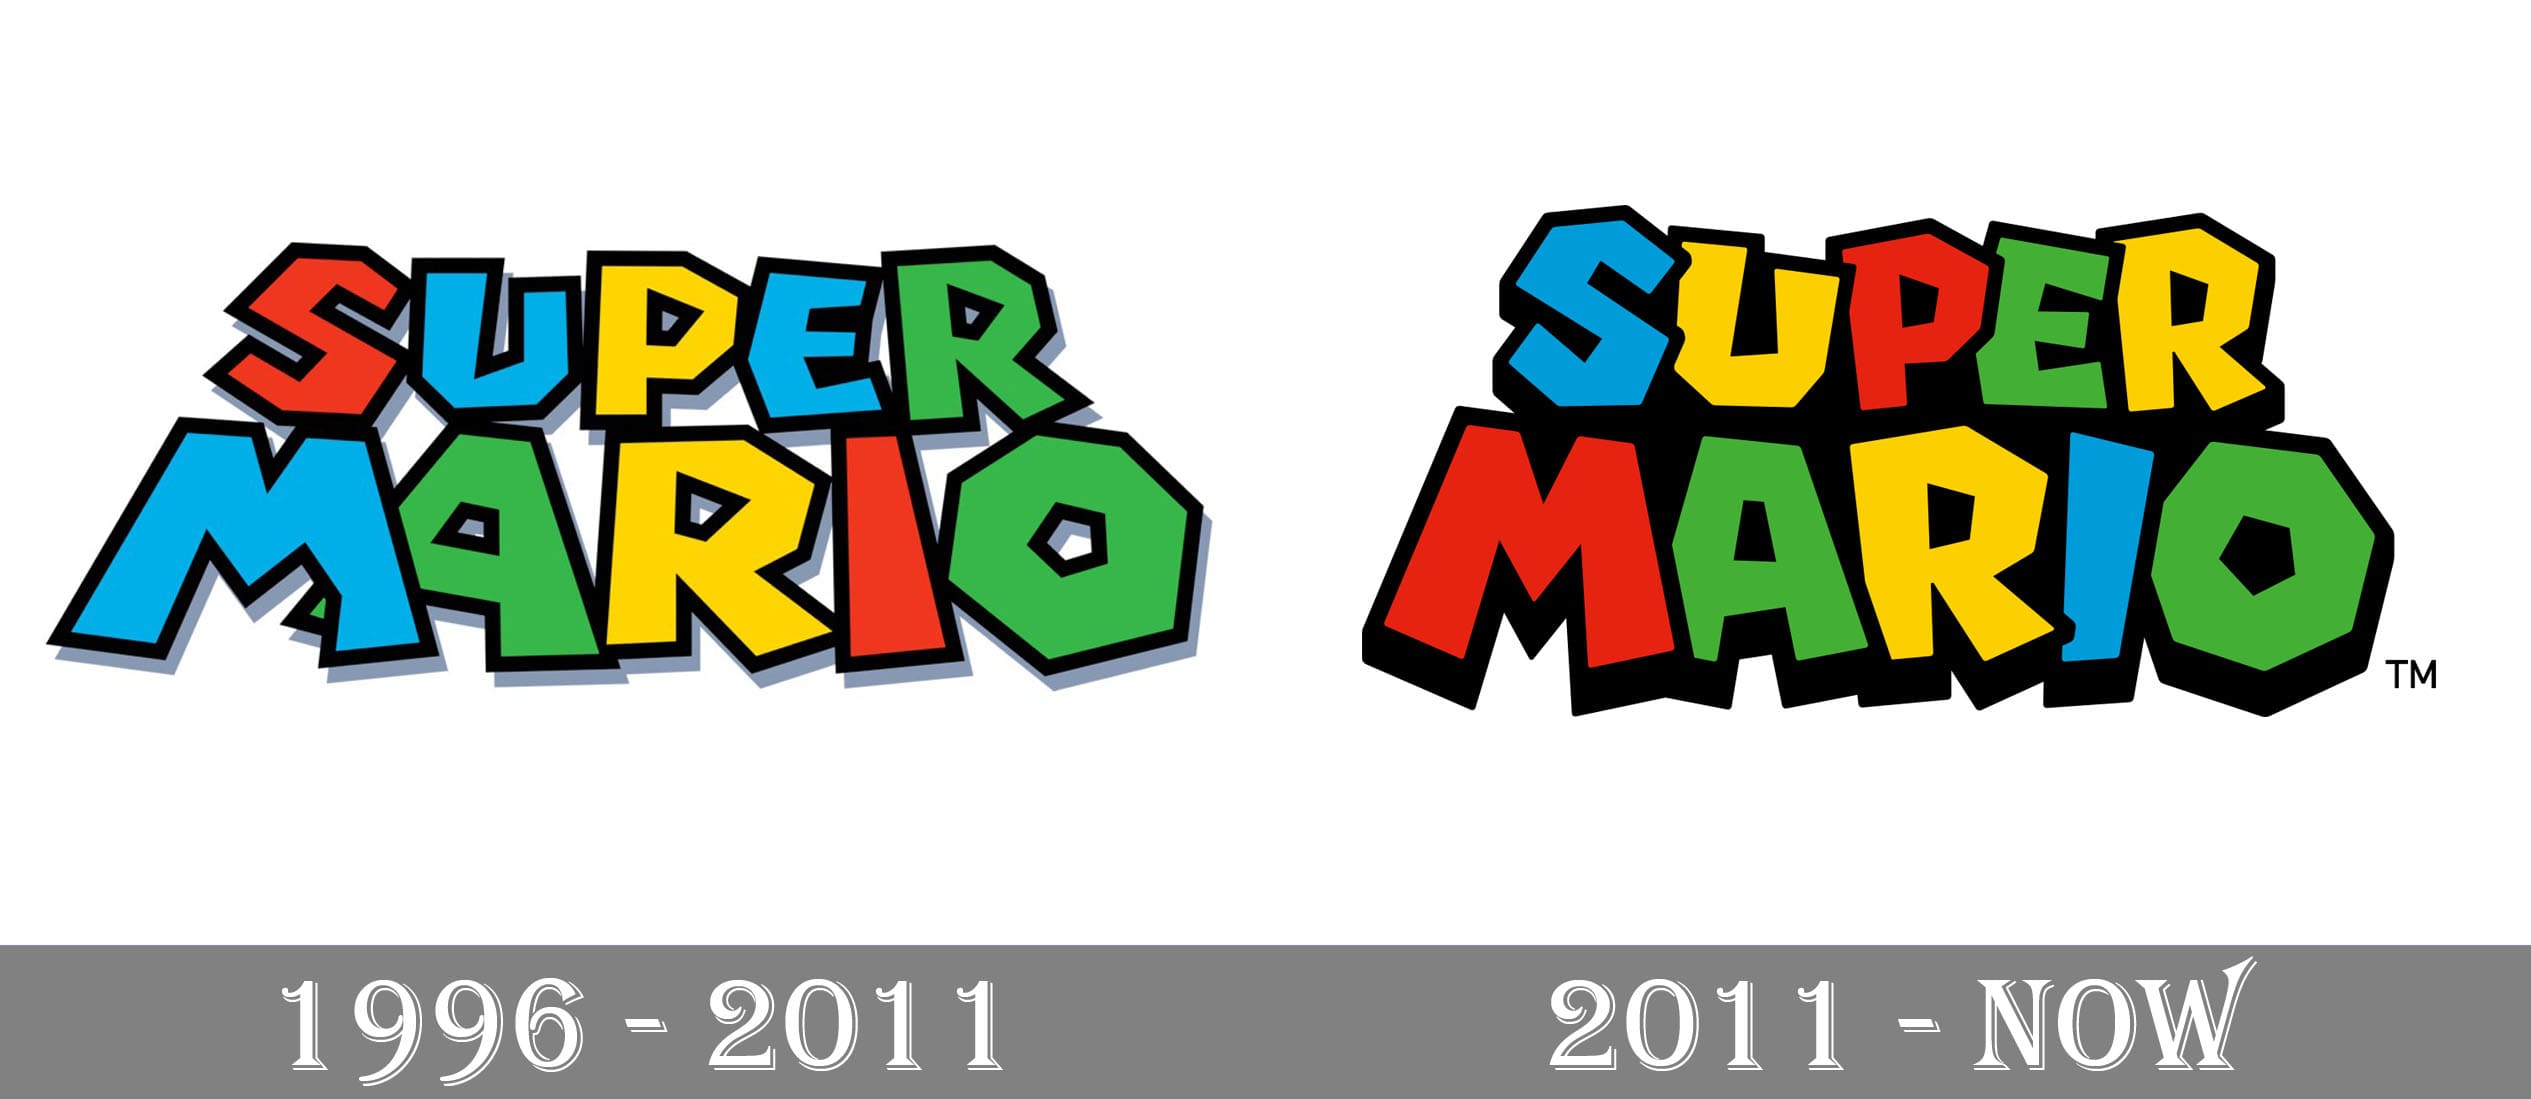 The history of Super Mario